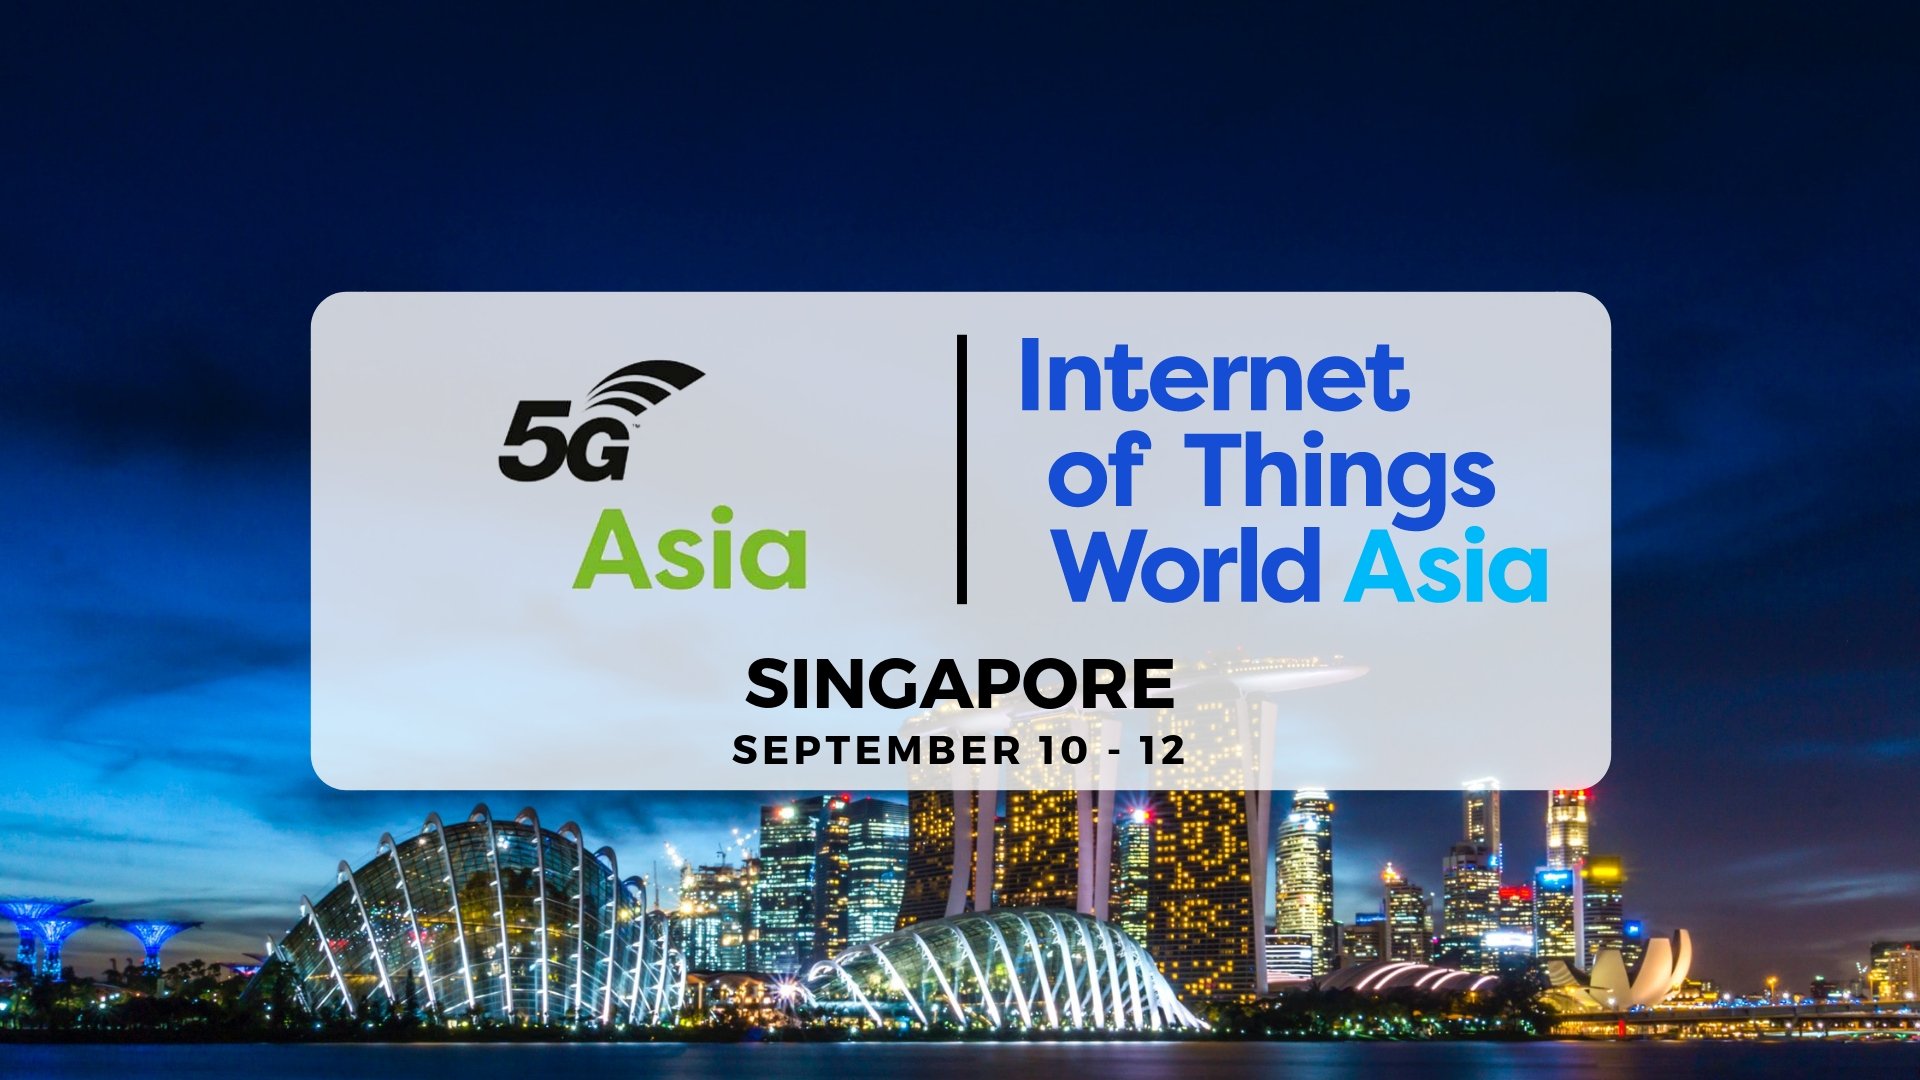 5G-Asia-IoT-World-3.jpg